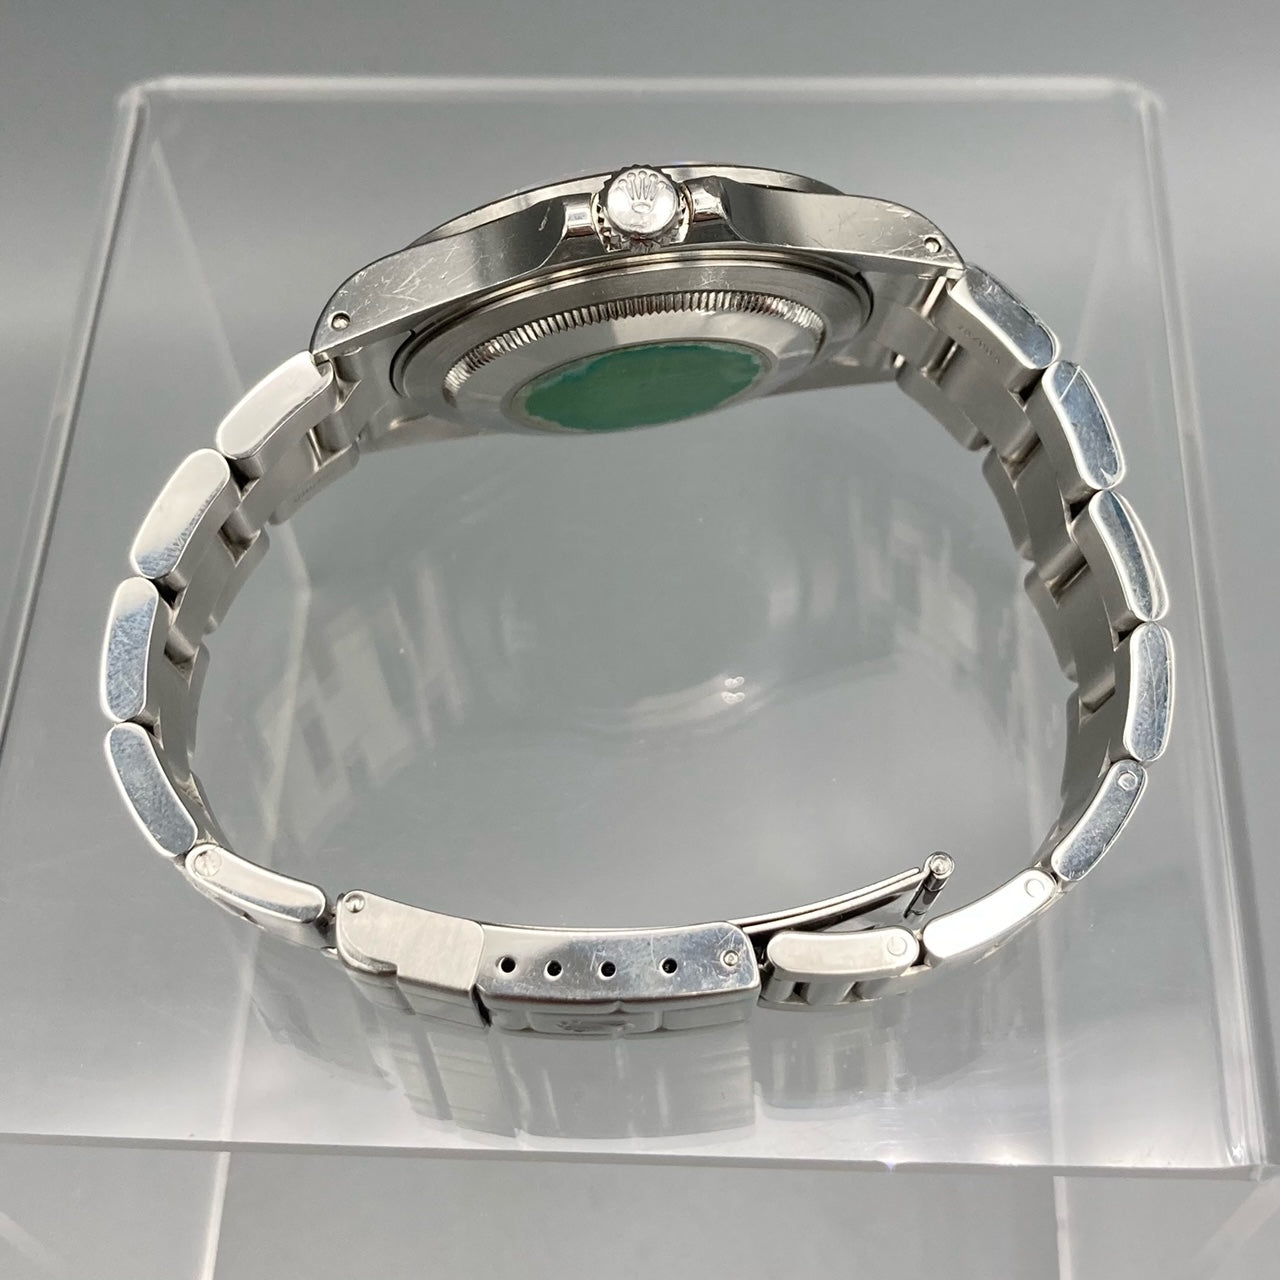 Rolex Explorer II White Dial Watch 16570